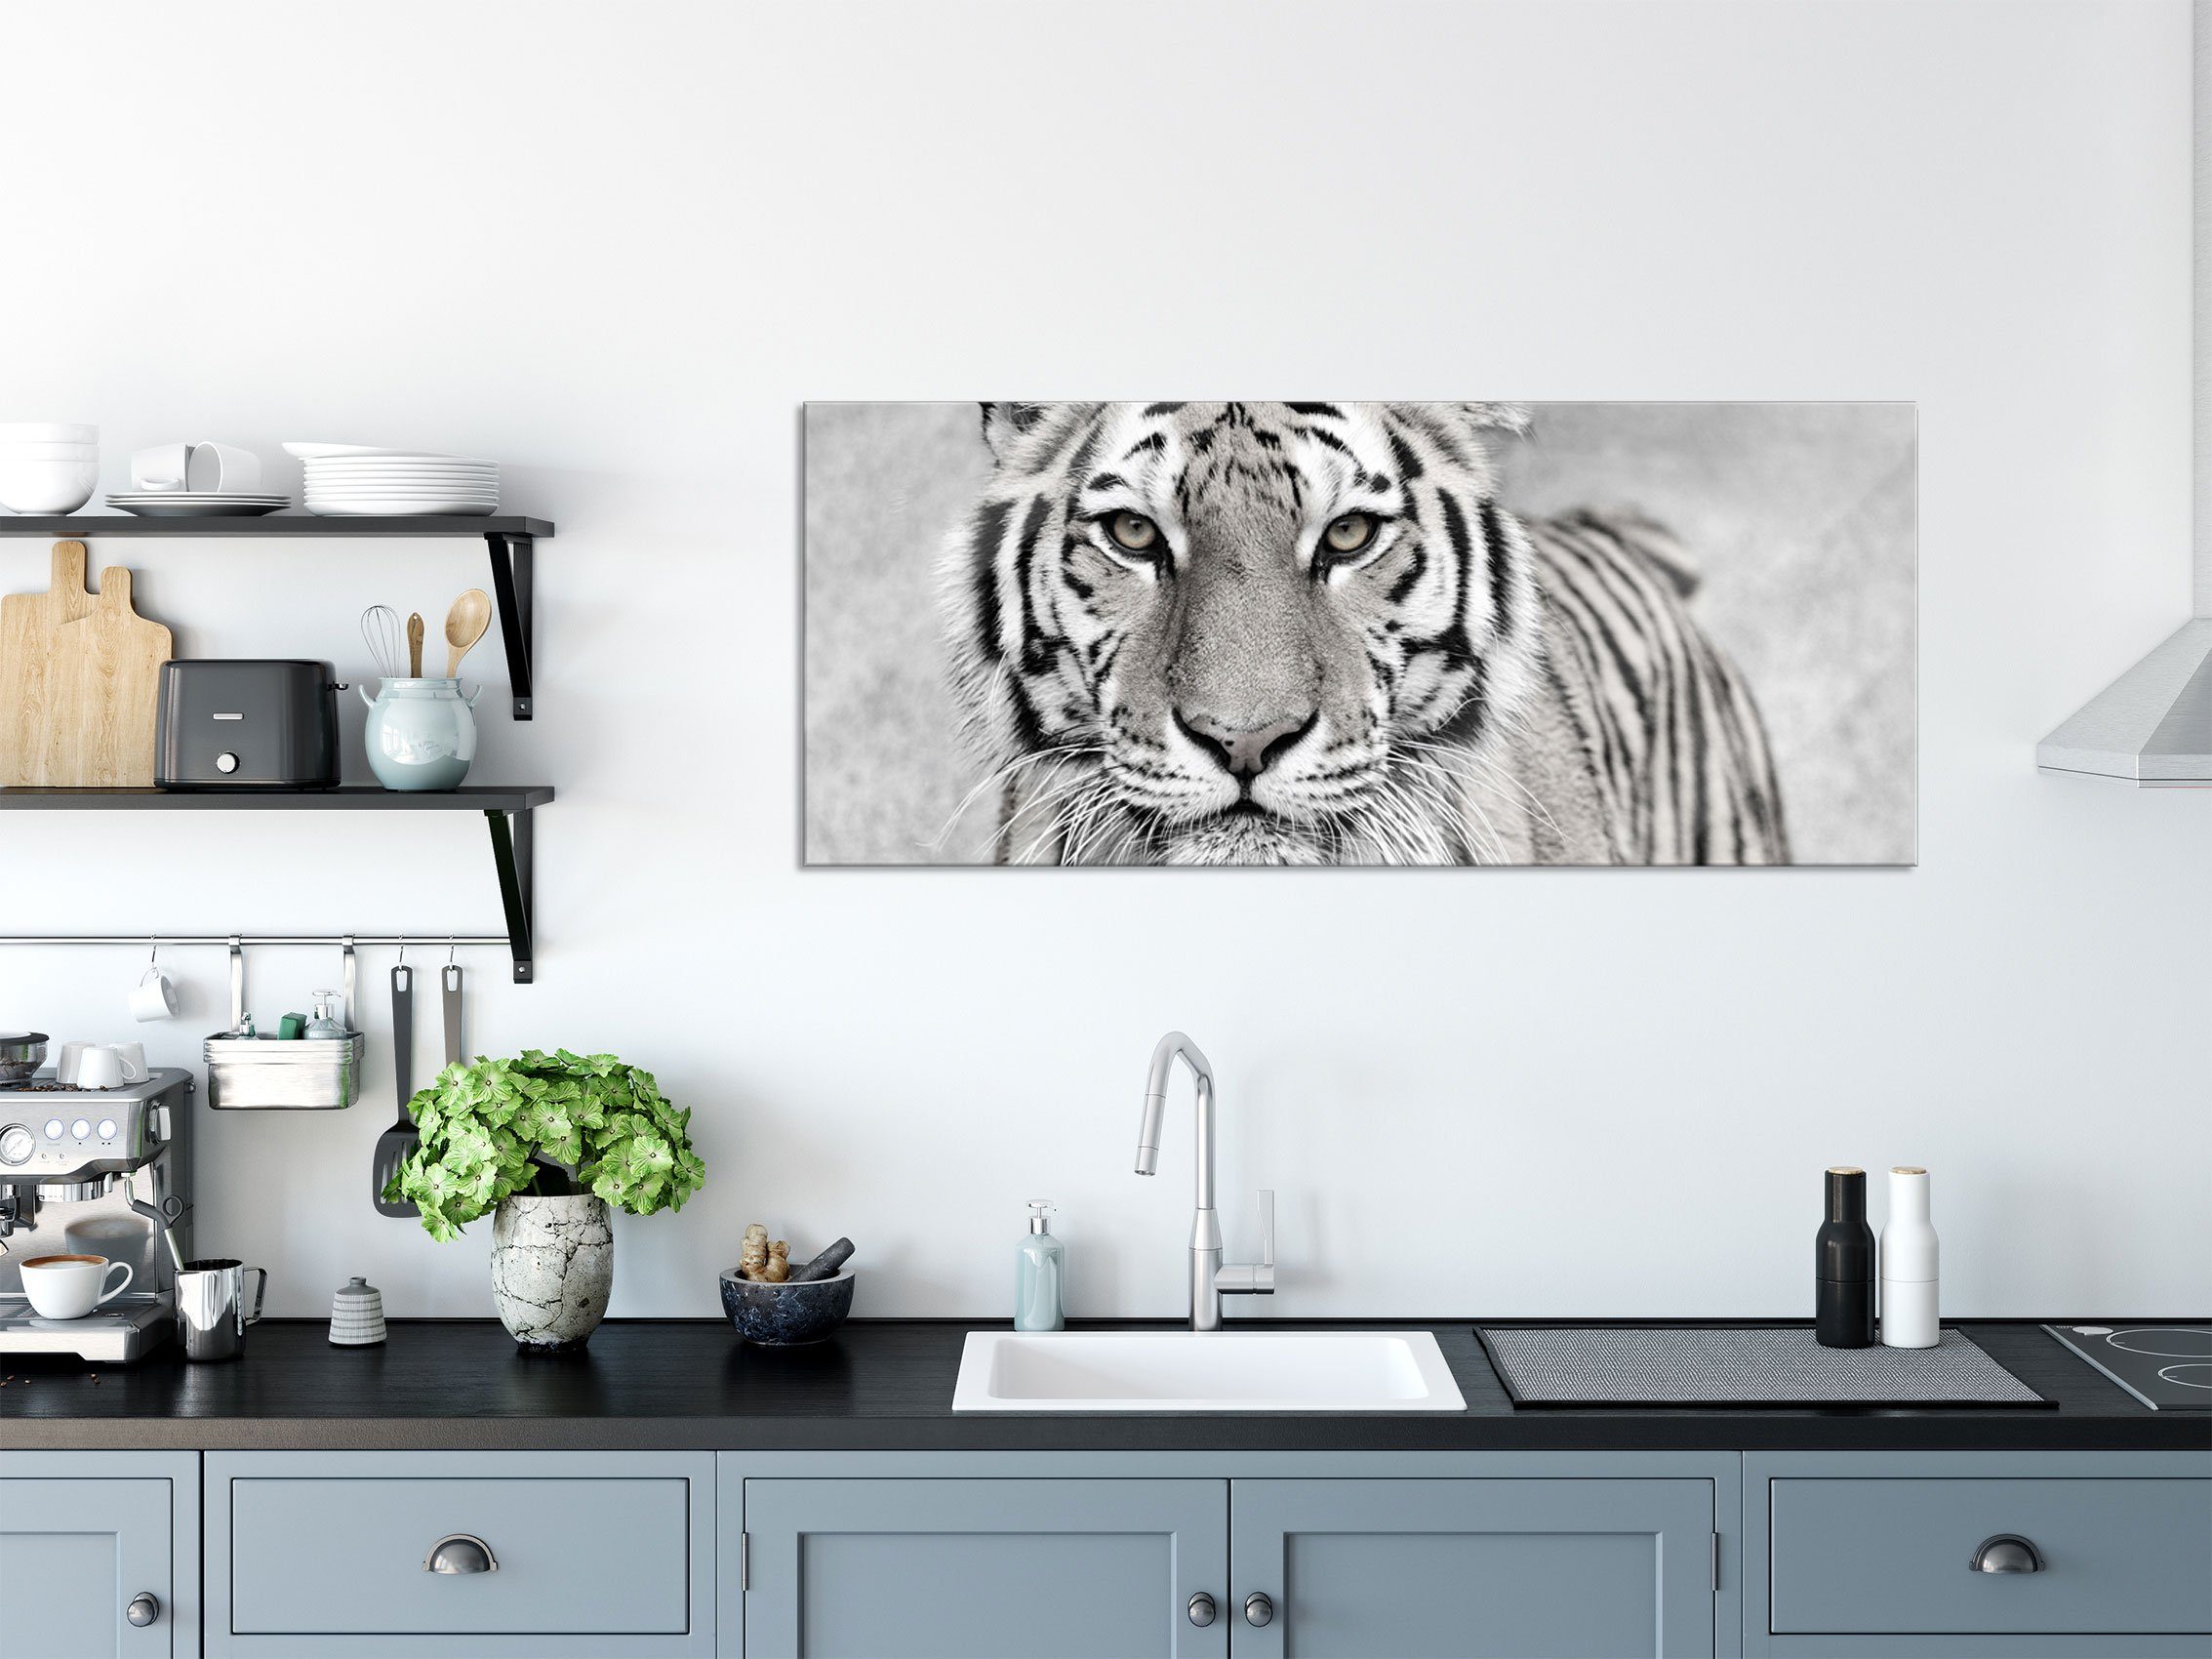 Anmutiger Glasbild aus in, Anmutiger Glasbild Aufhängungen Echtglas, St), Tiger in inkl. und Abstandshalter Tiger (1 Pixxprint